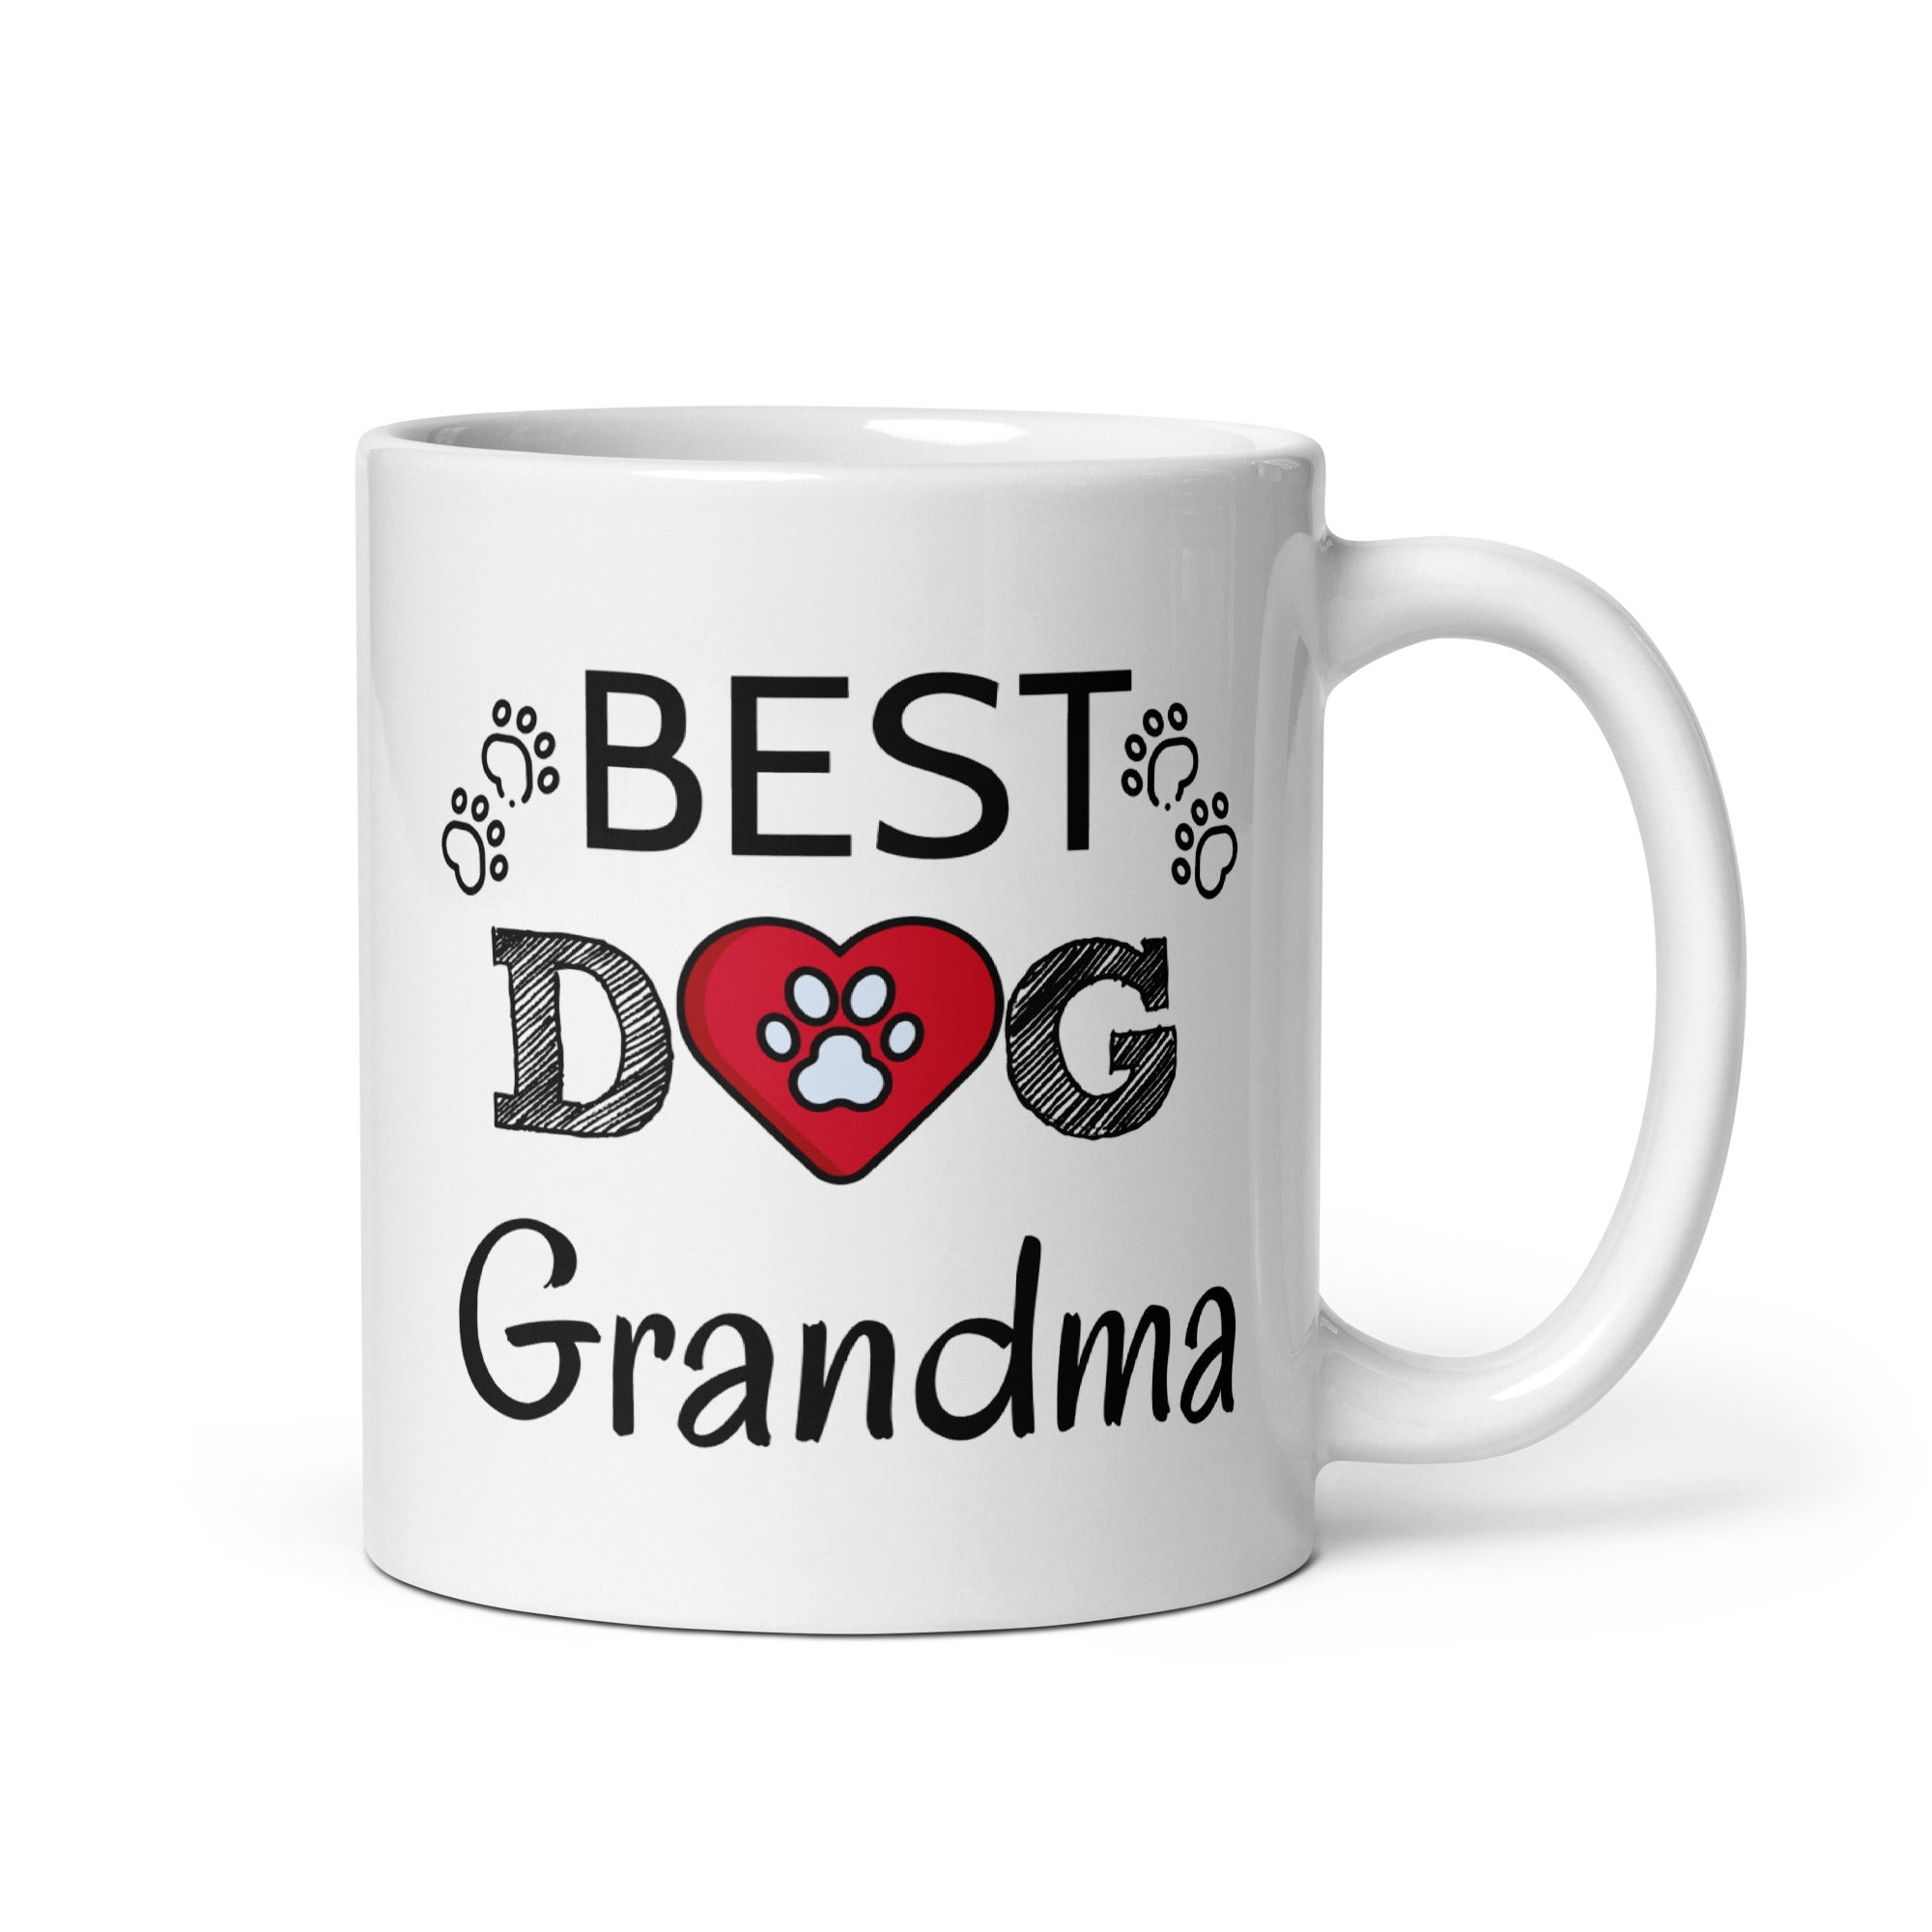 Best Dog Grandma Coffee Mug